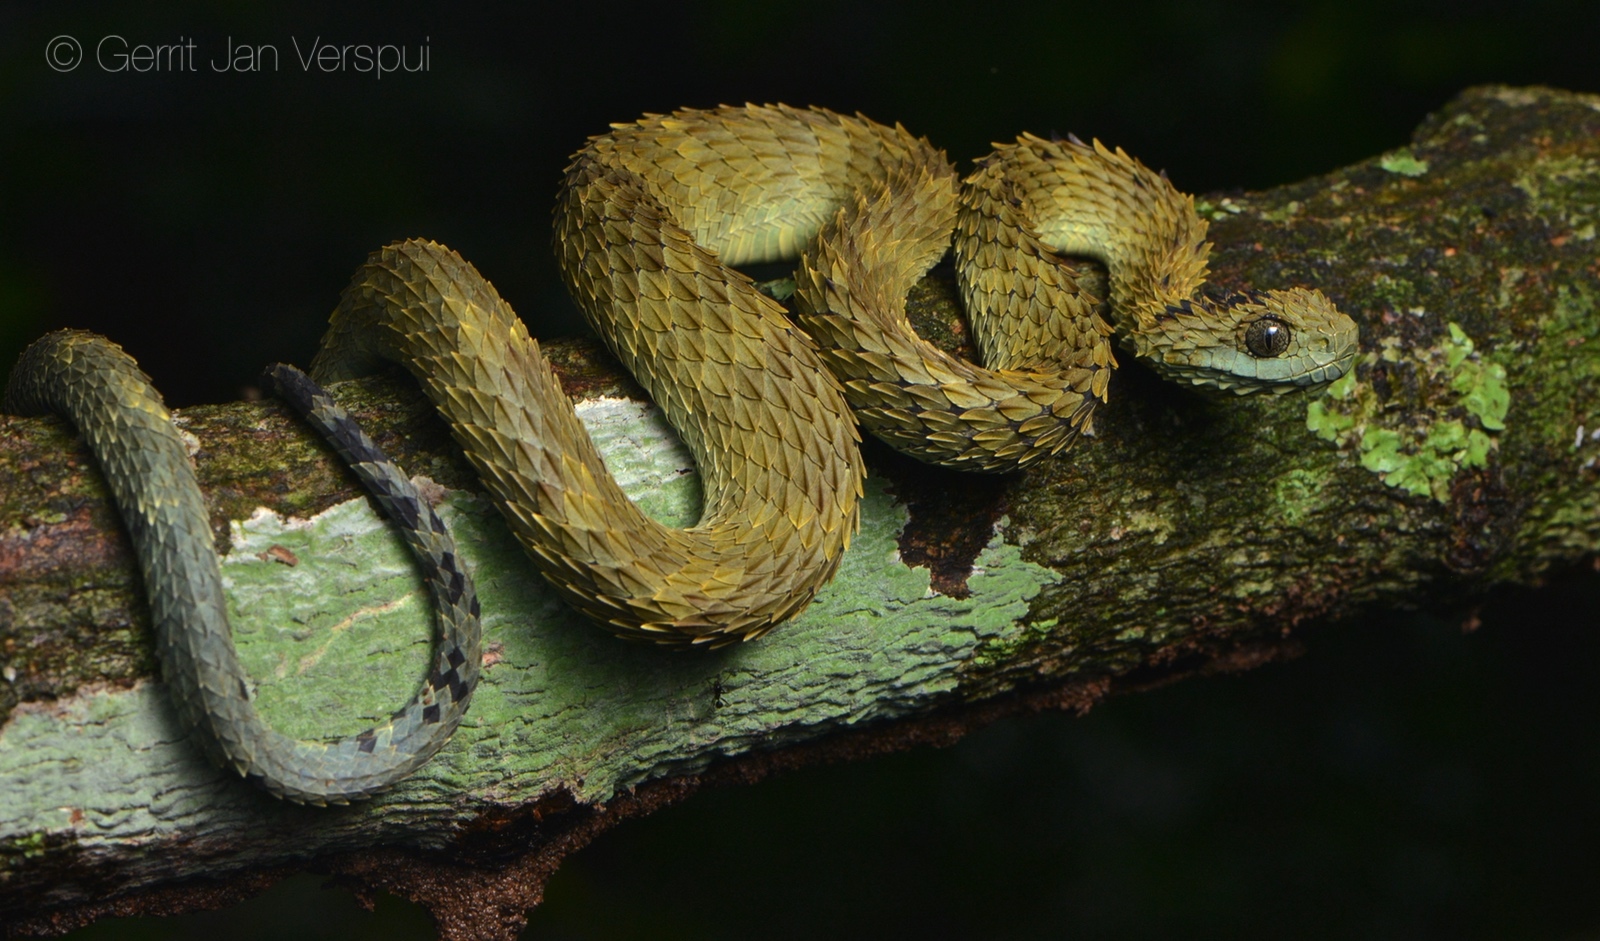 🔥 Atheris hispida  rough-scaled bush viper : r/NatureIsFuckingLit